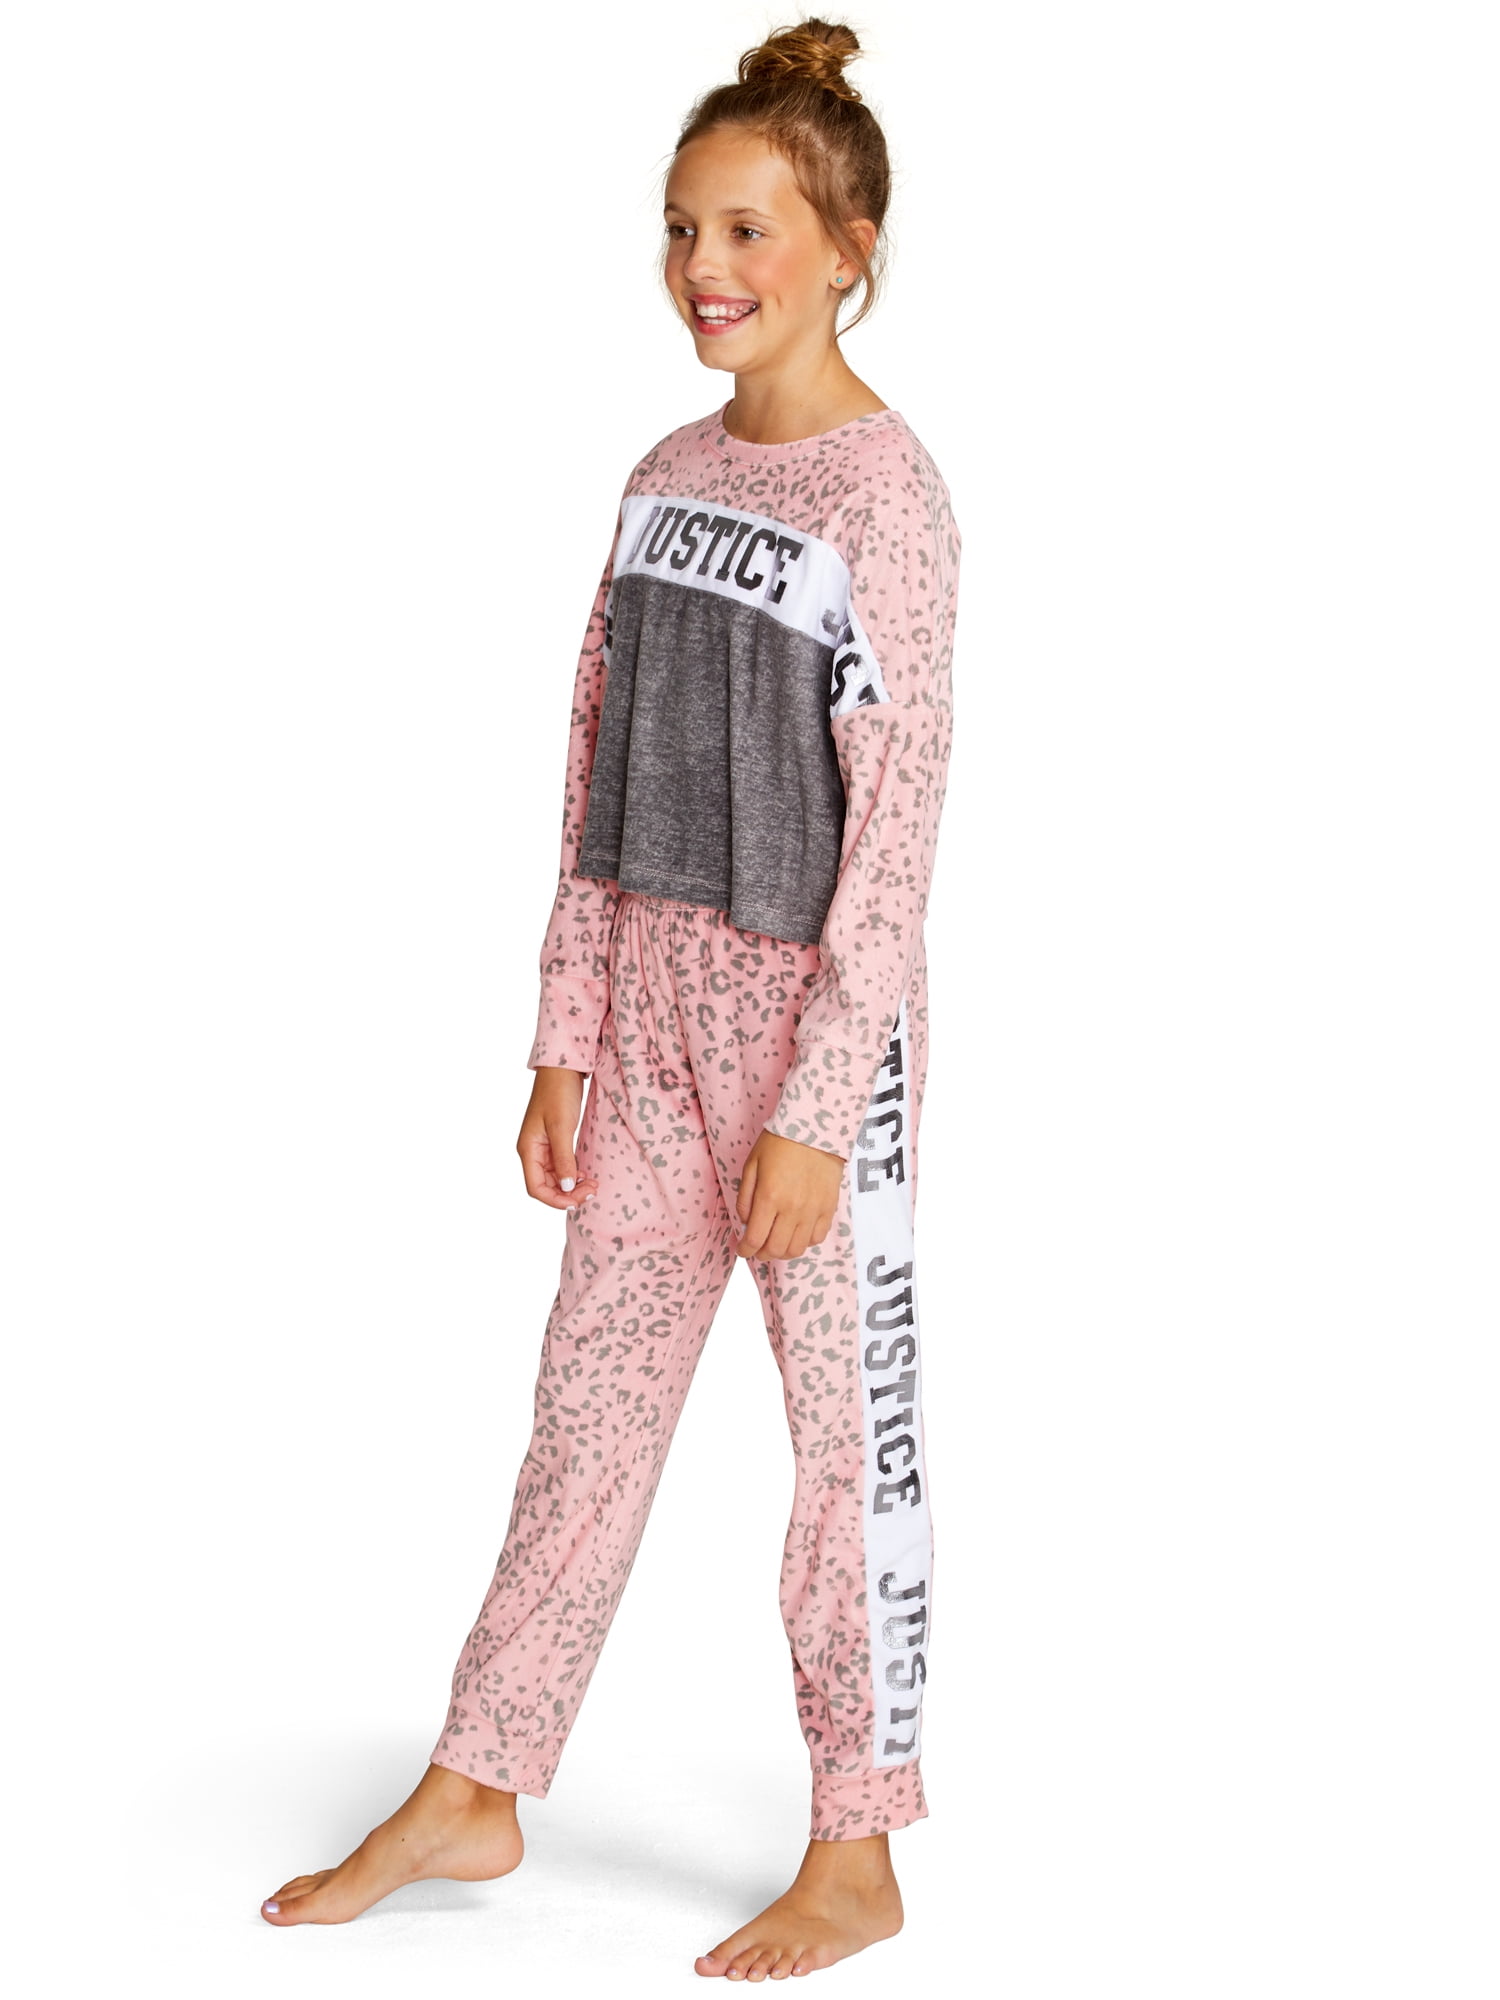 Remission liar West Justice Sleepwear Sets Long Sleeve Crew Neck Elastic Waistband Pajamas (Big  Girls or Little Girls), 3 Piece Set - Walmart.com